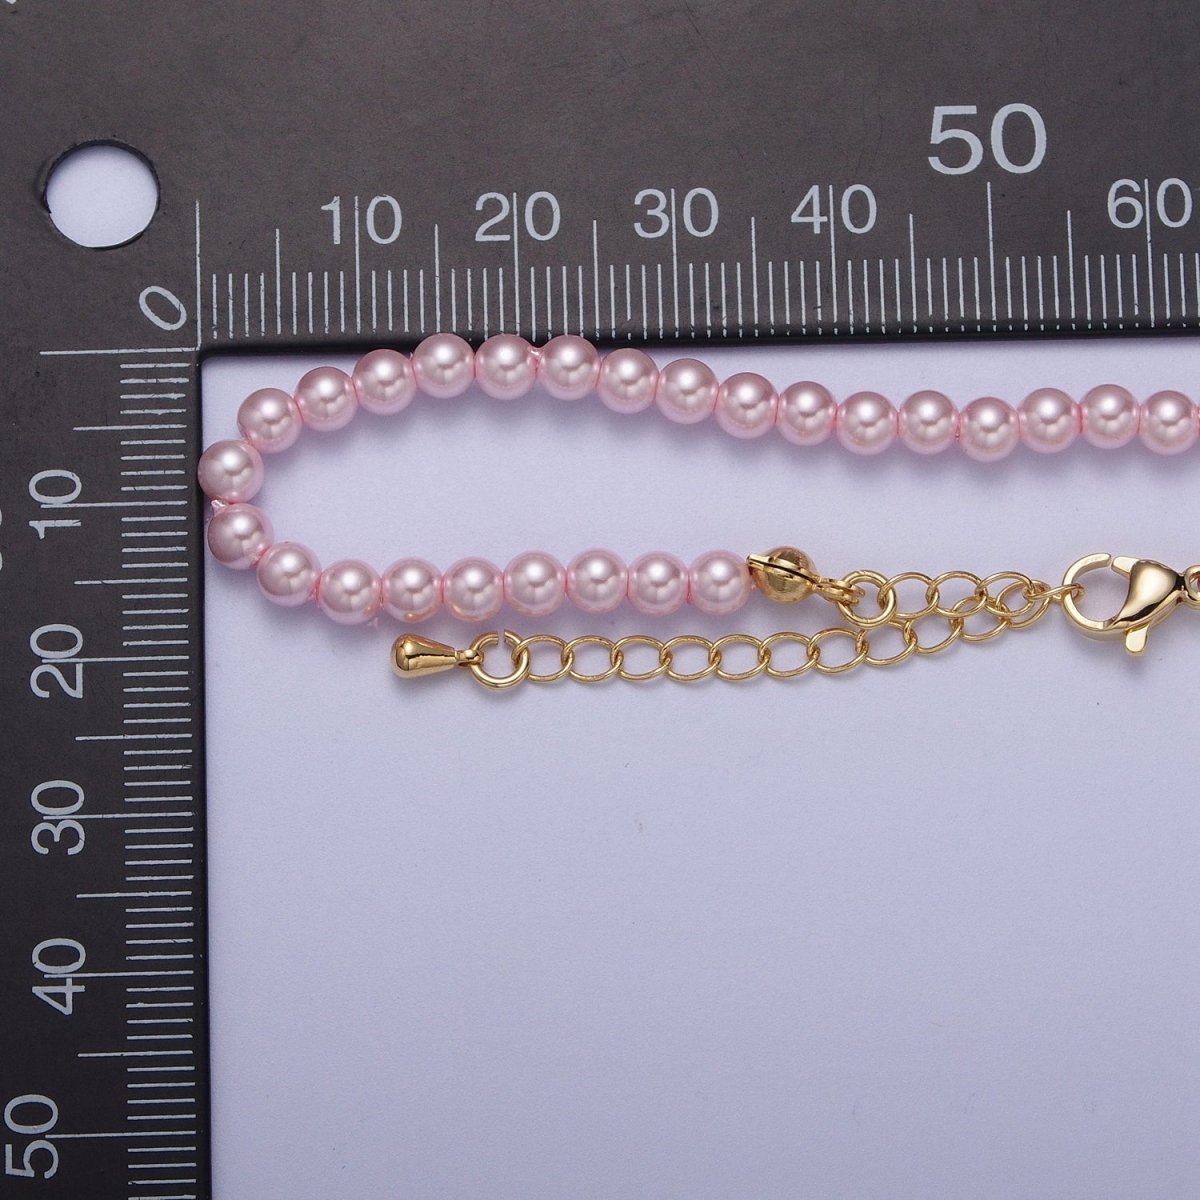 Gold Filled 17 Inch Round White/Pink Shell Pearl Layering Choker Necklace in Silver & Gold | WA-1176 WA-1177 WA-1178 WA-1179 WA-1180 Clearance Pricing - DLUXCA